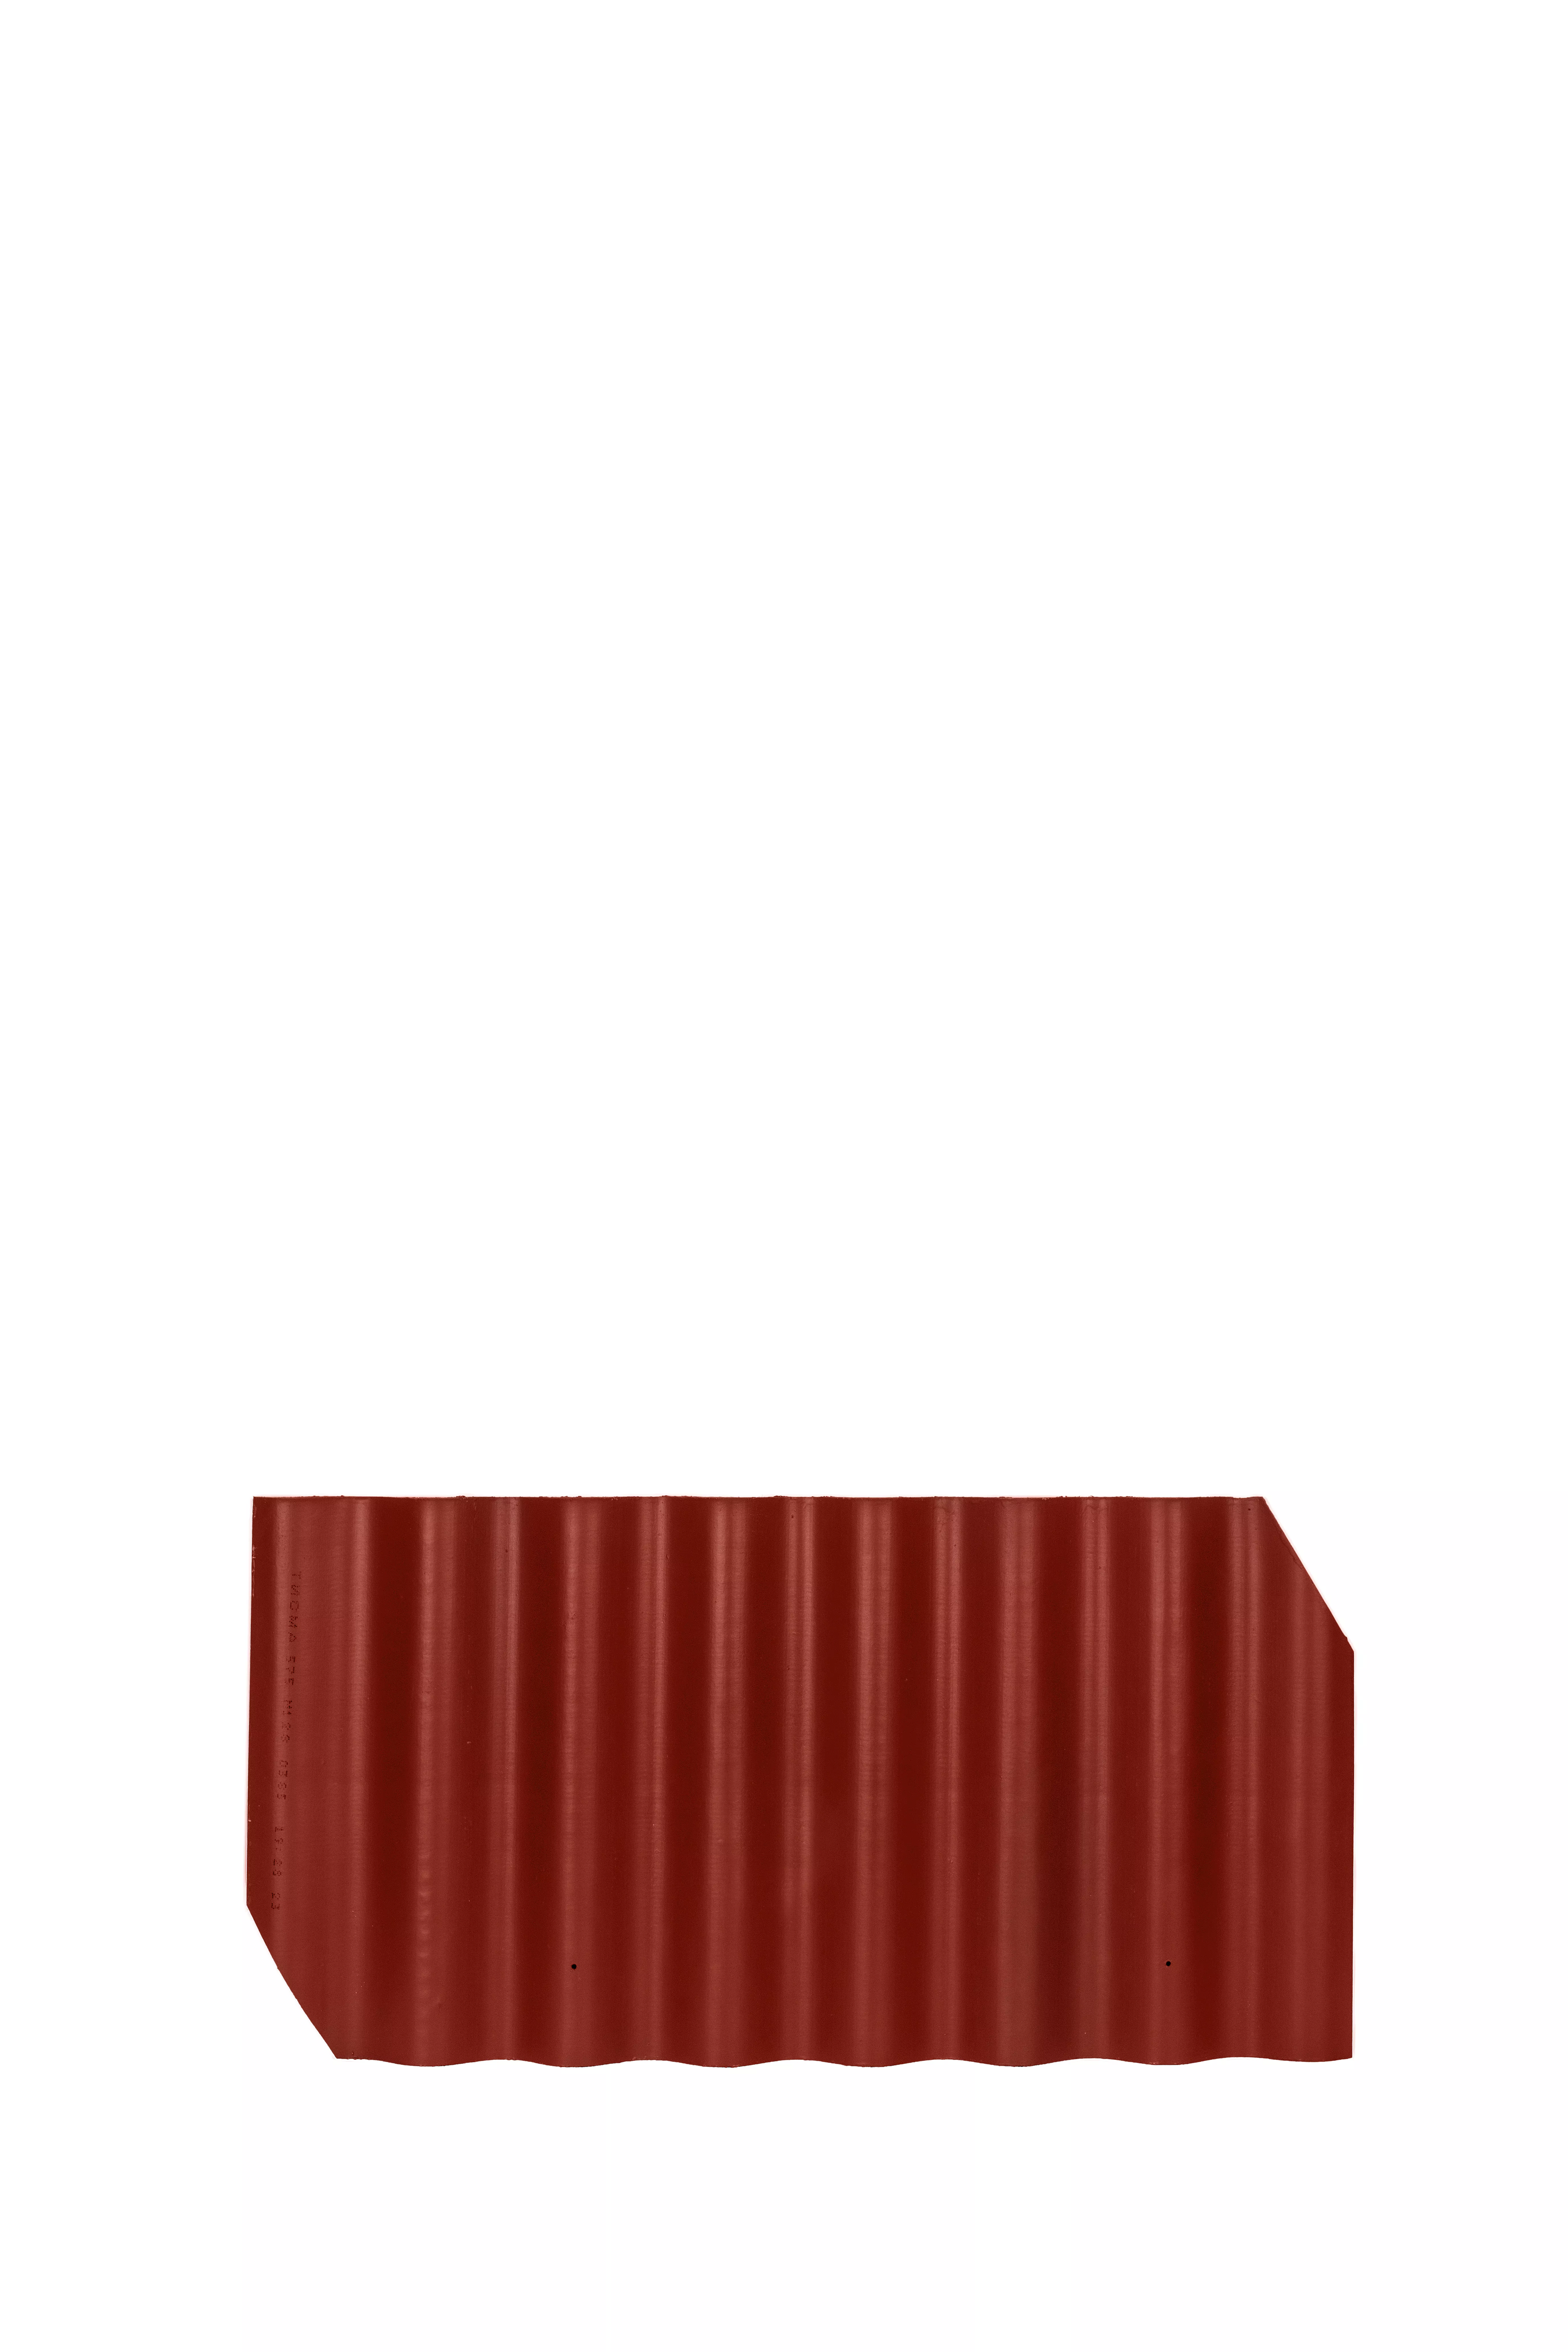 Черепица фиброцементная ТИСМА 40/150-8-575х1130х5,8 красный M128 ТУ